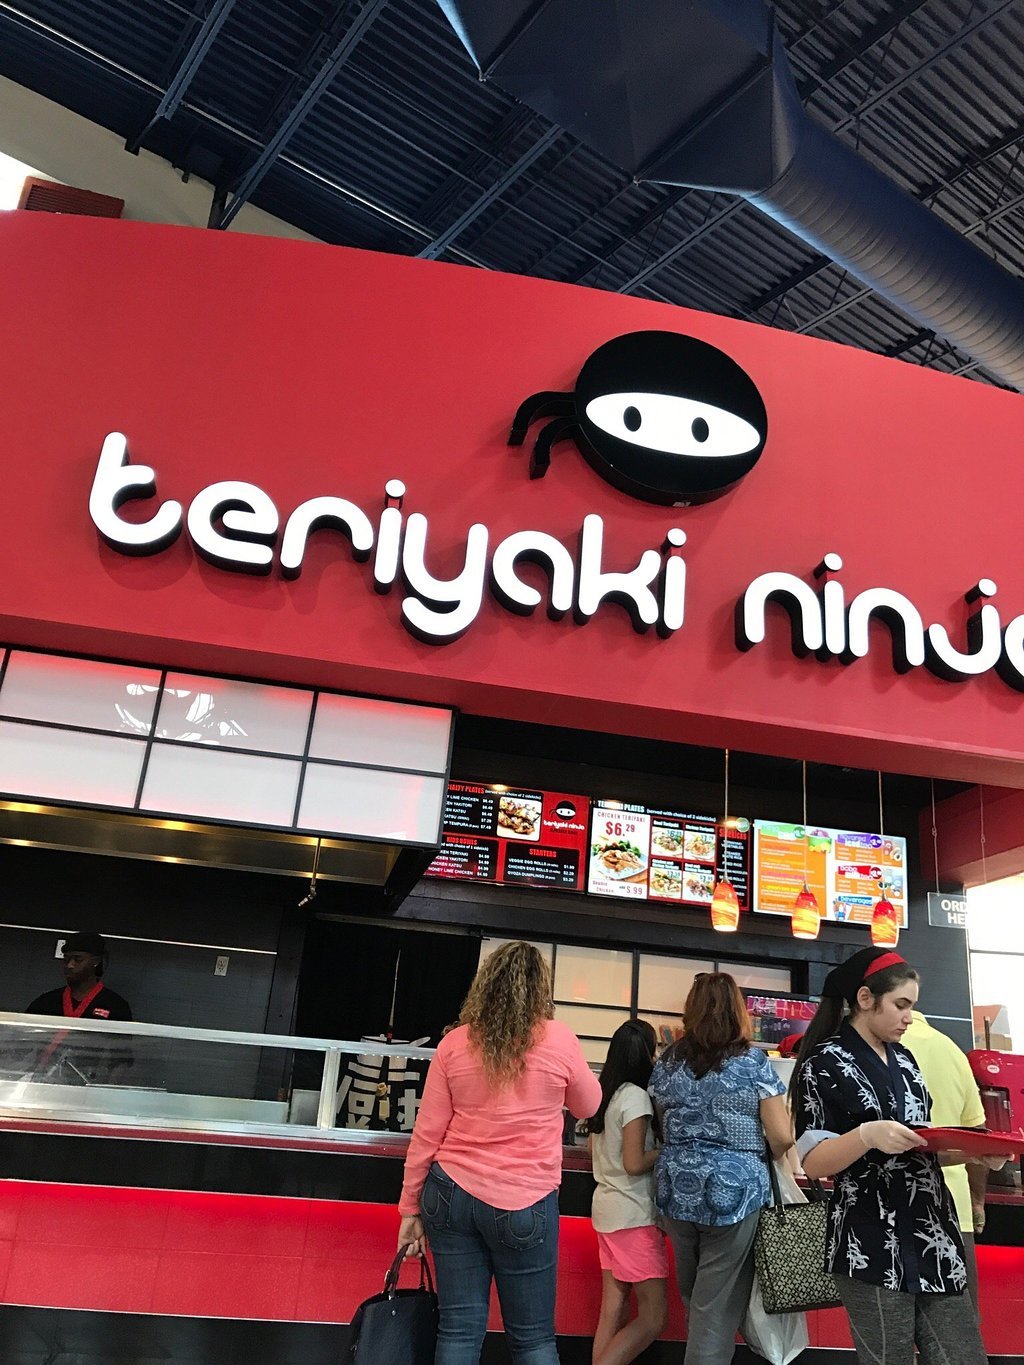 Teriyaki Ninja Japanese Grill